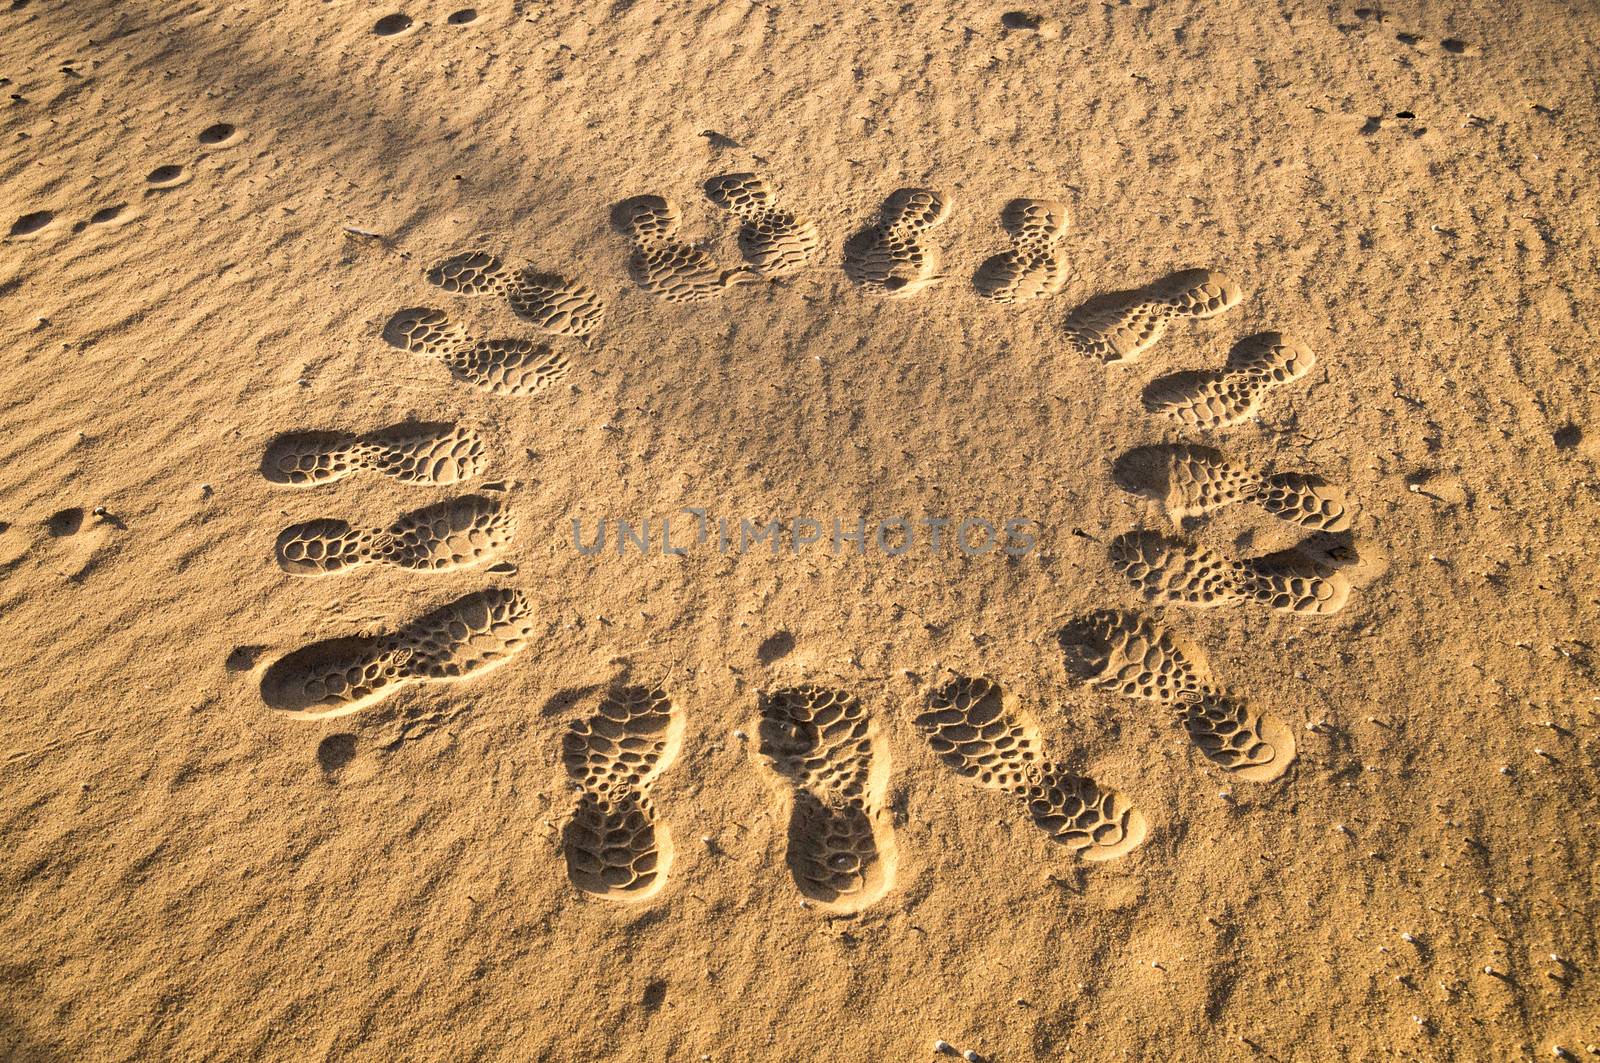 Circle of footprints in desert at dusk